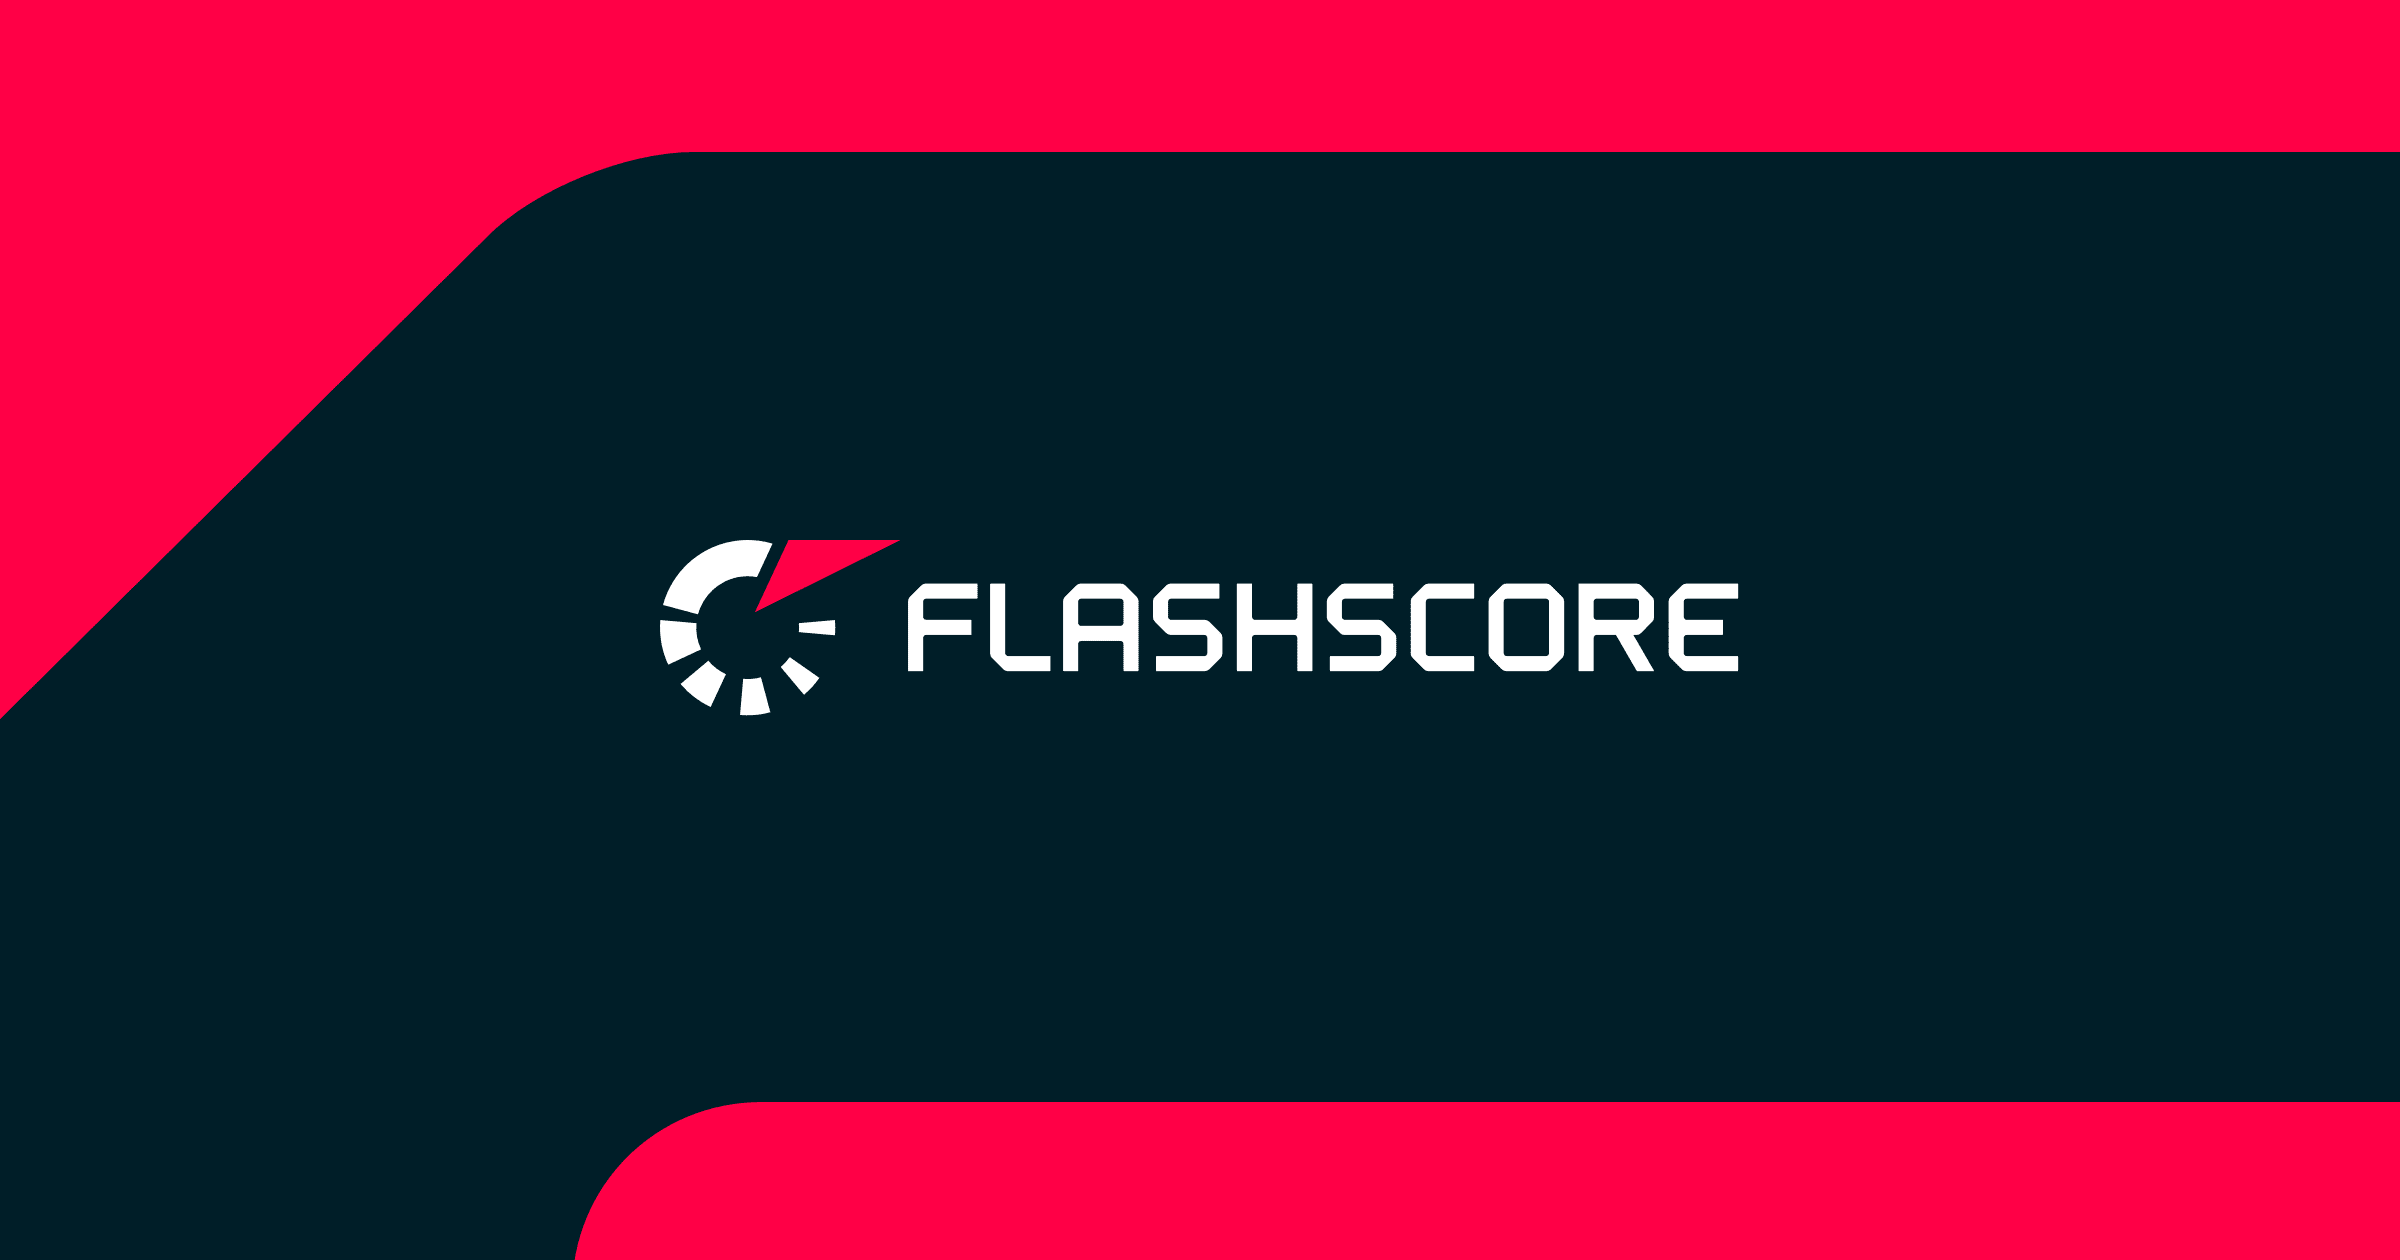 (c) Flashscore.co